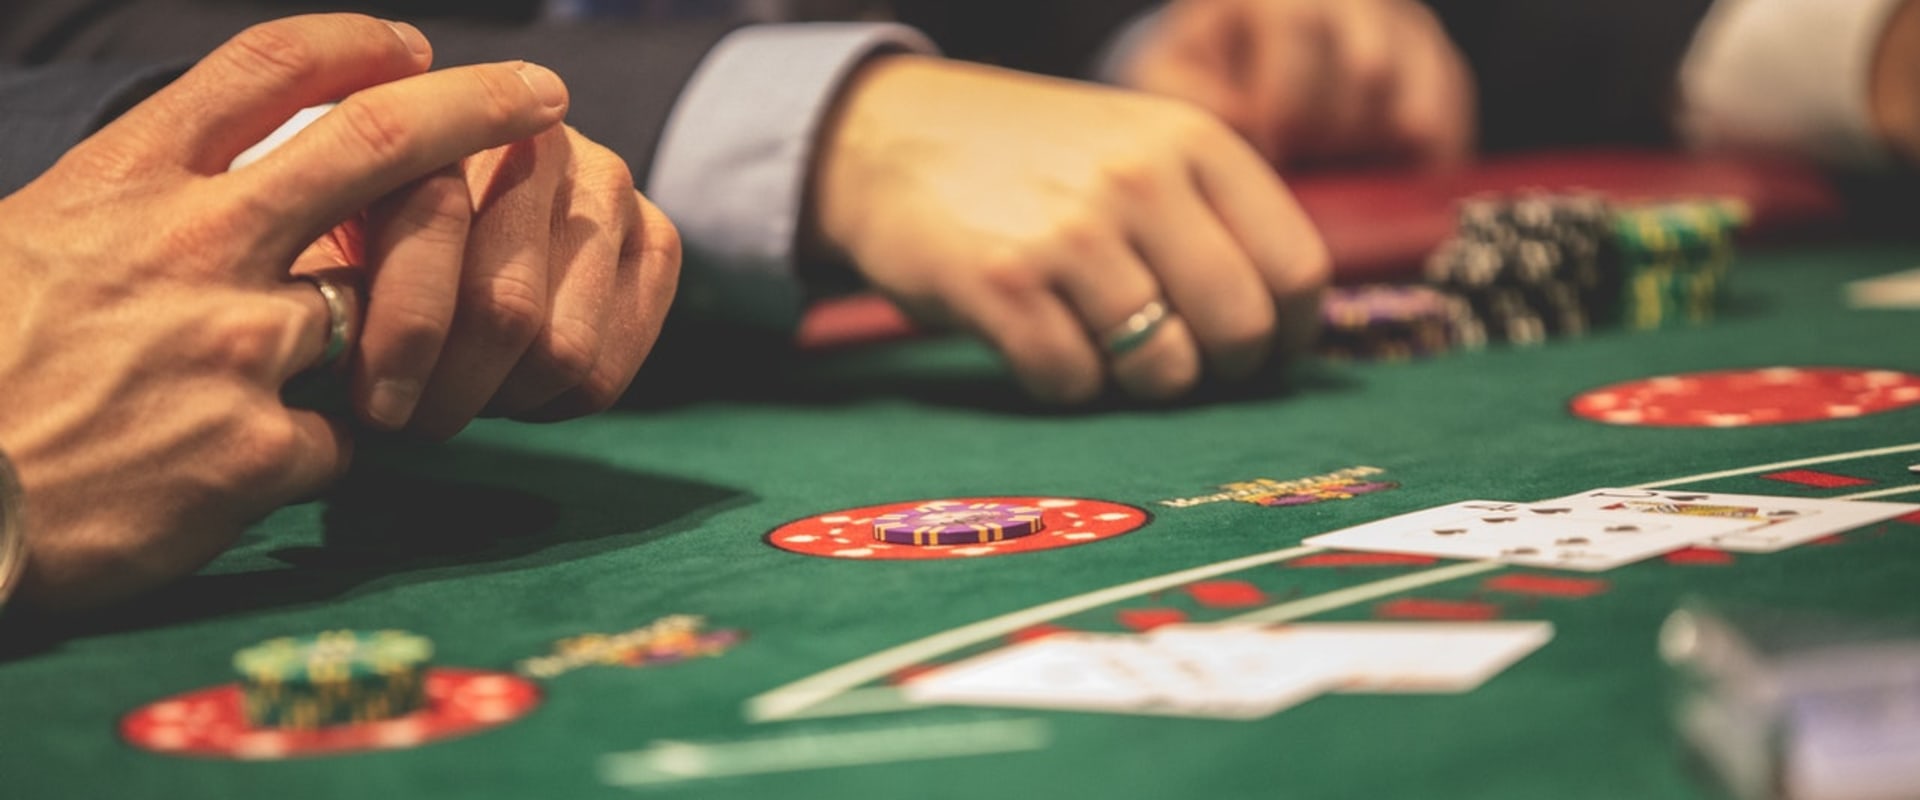 How do online casinos cheat?